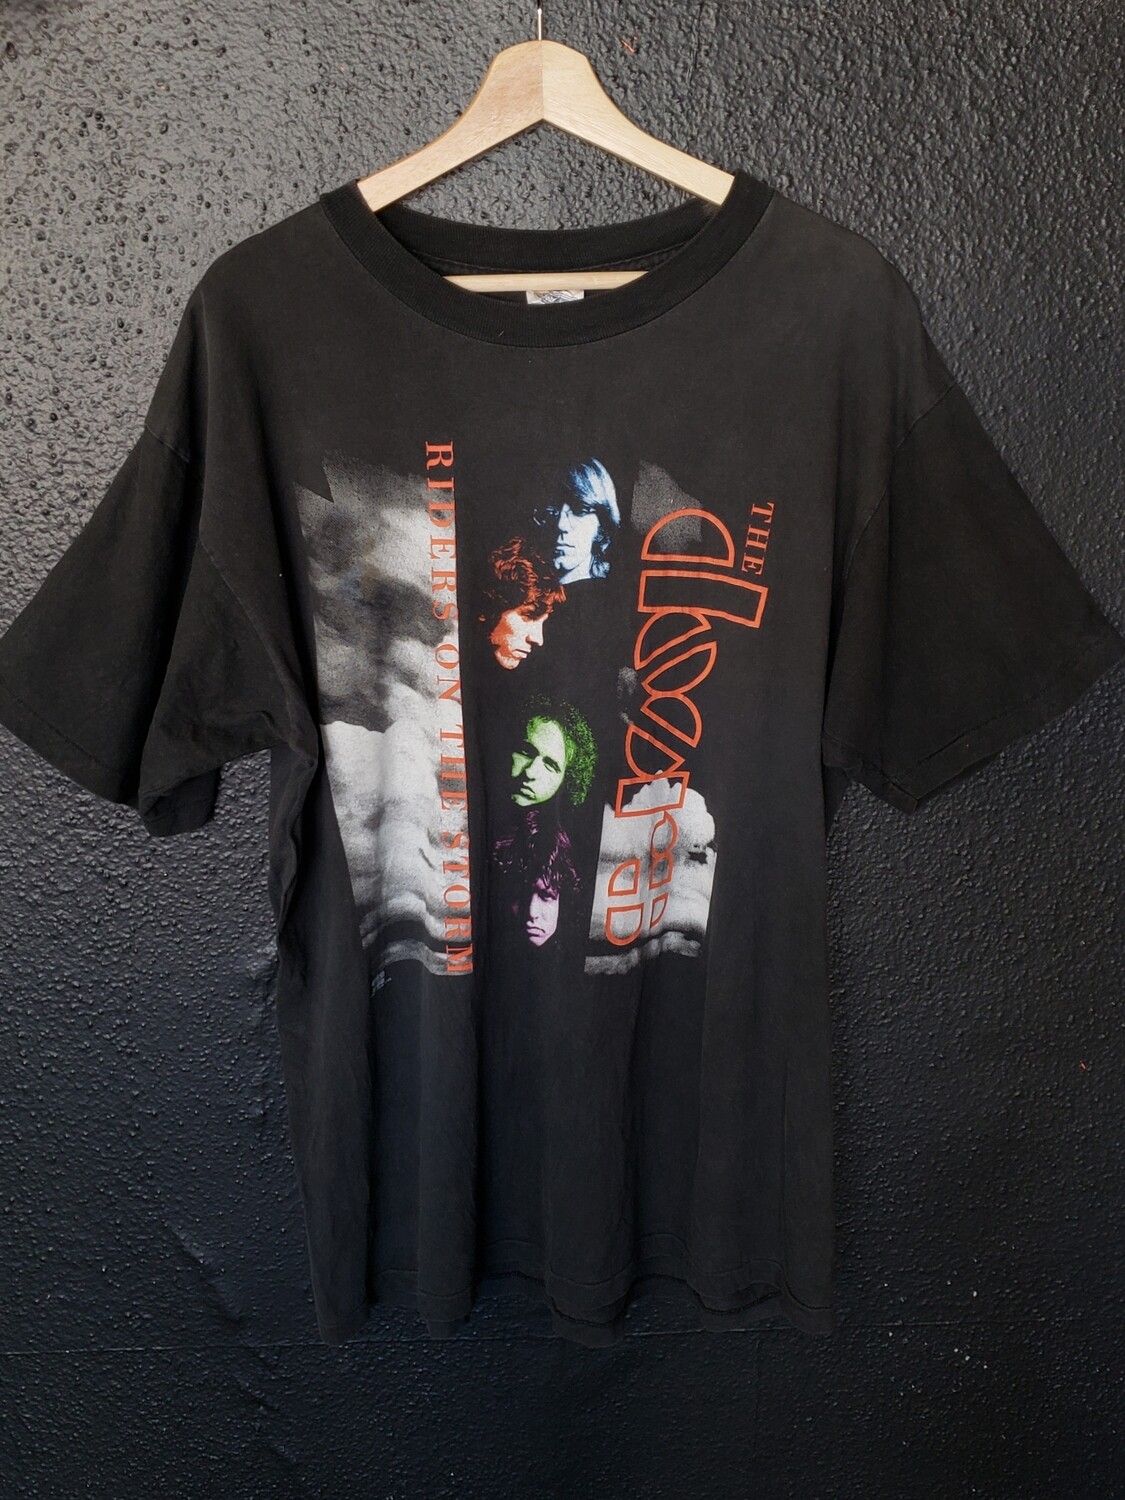 The Doors Band T-shirt